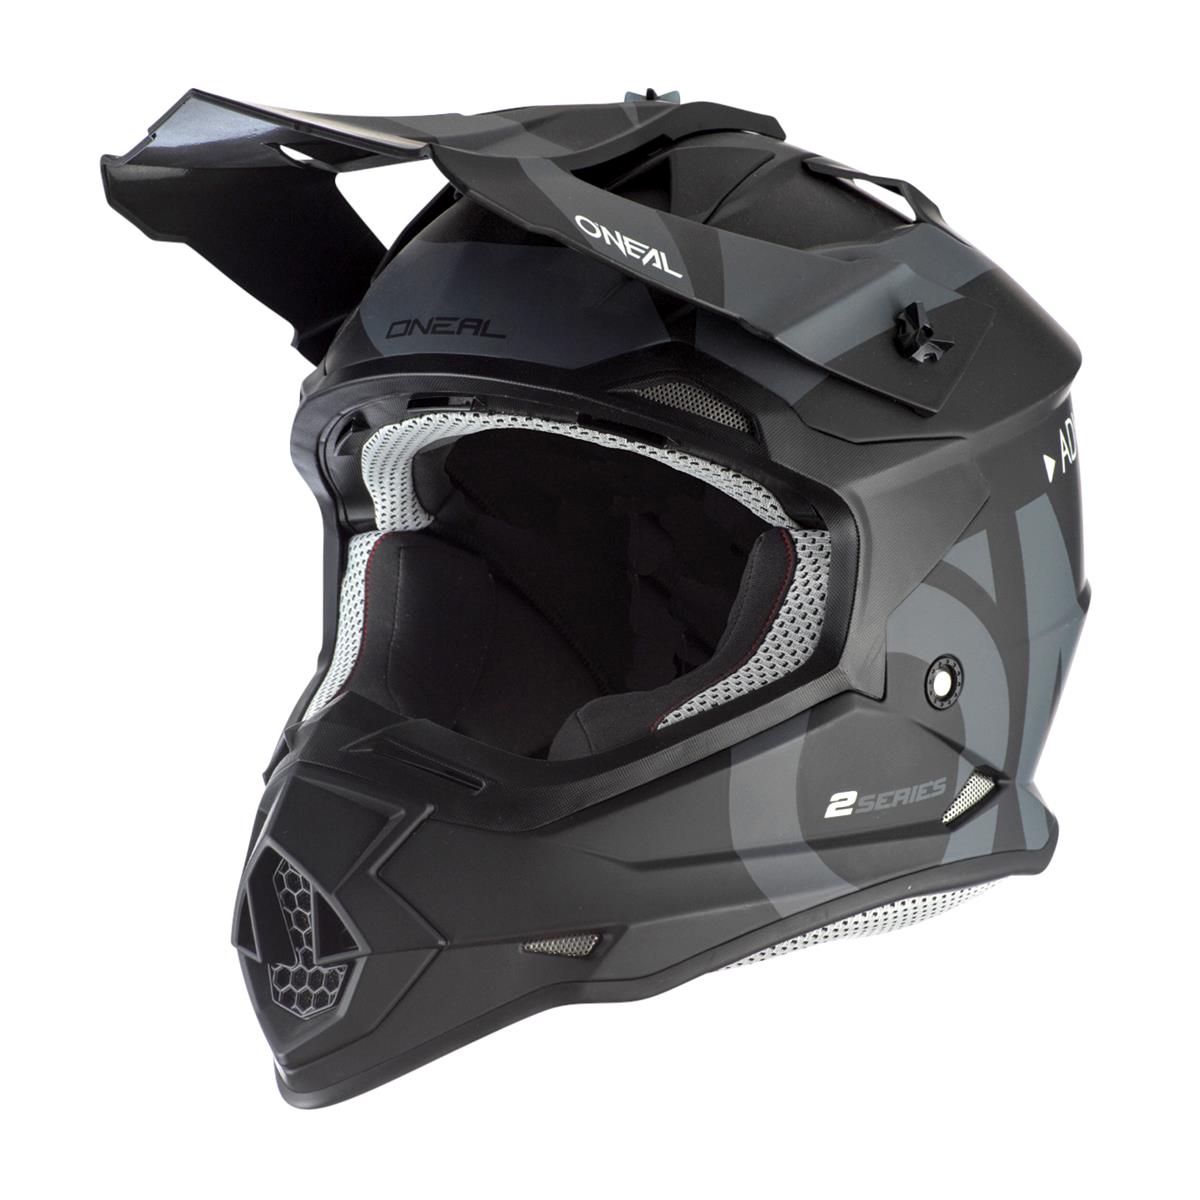 O'Neal Motocross-Helm 2SRS Slick Schwarz/Grau